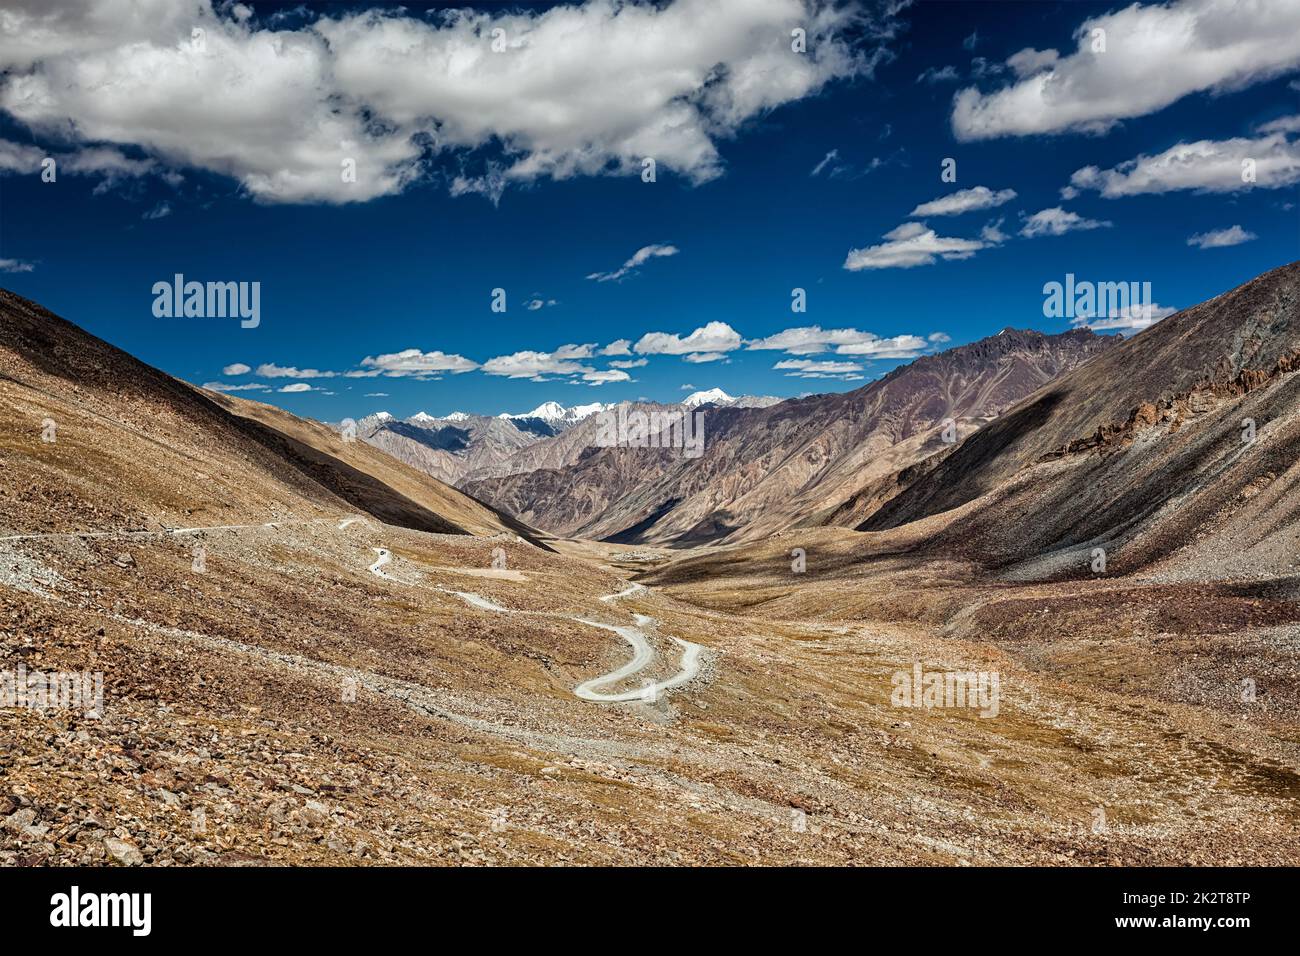 Karakoram Range and road in valley, Ladakh, India Stock Photo